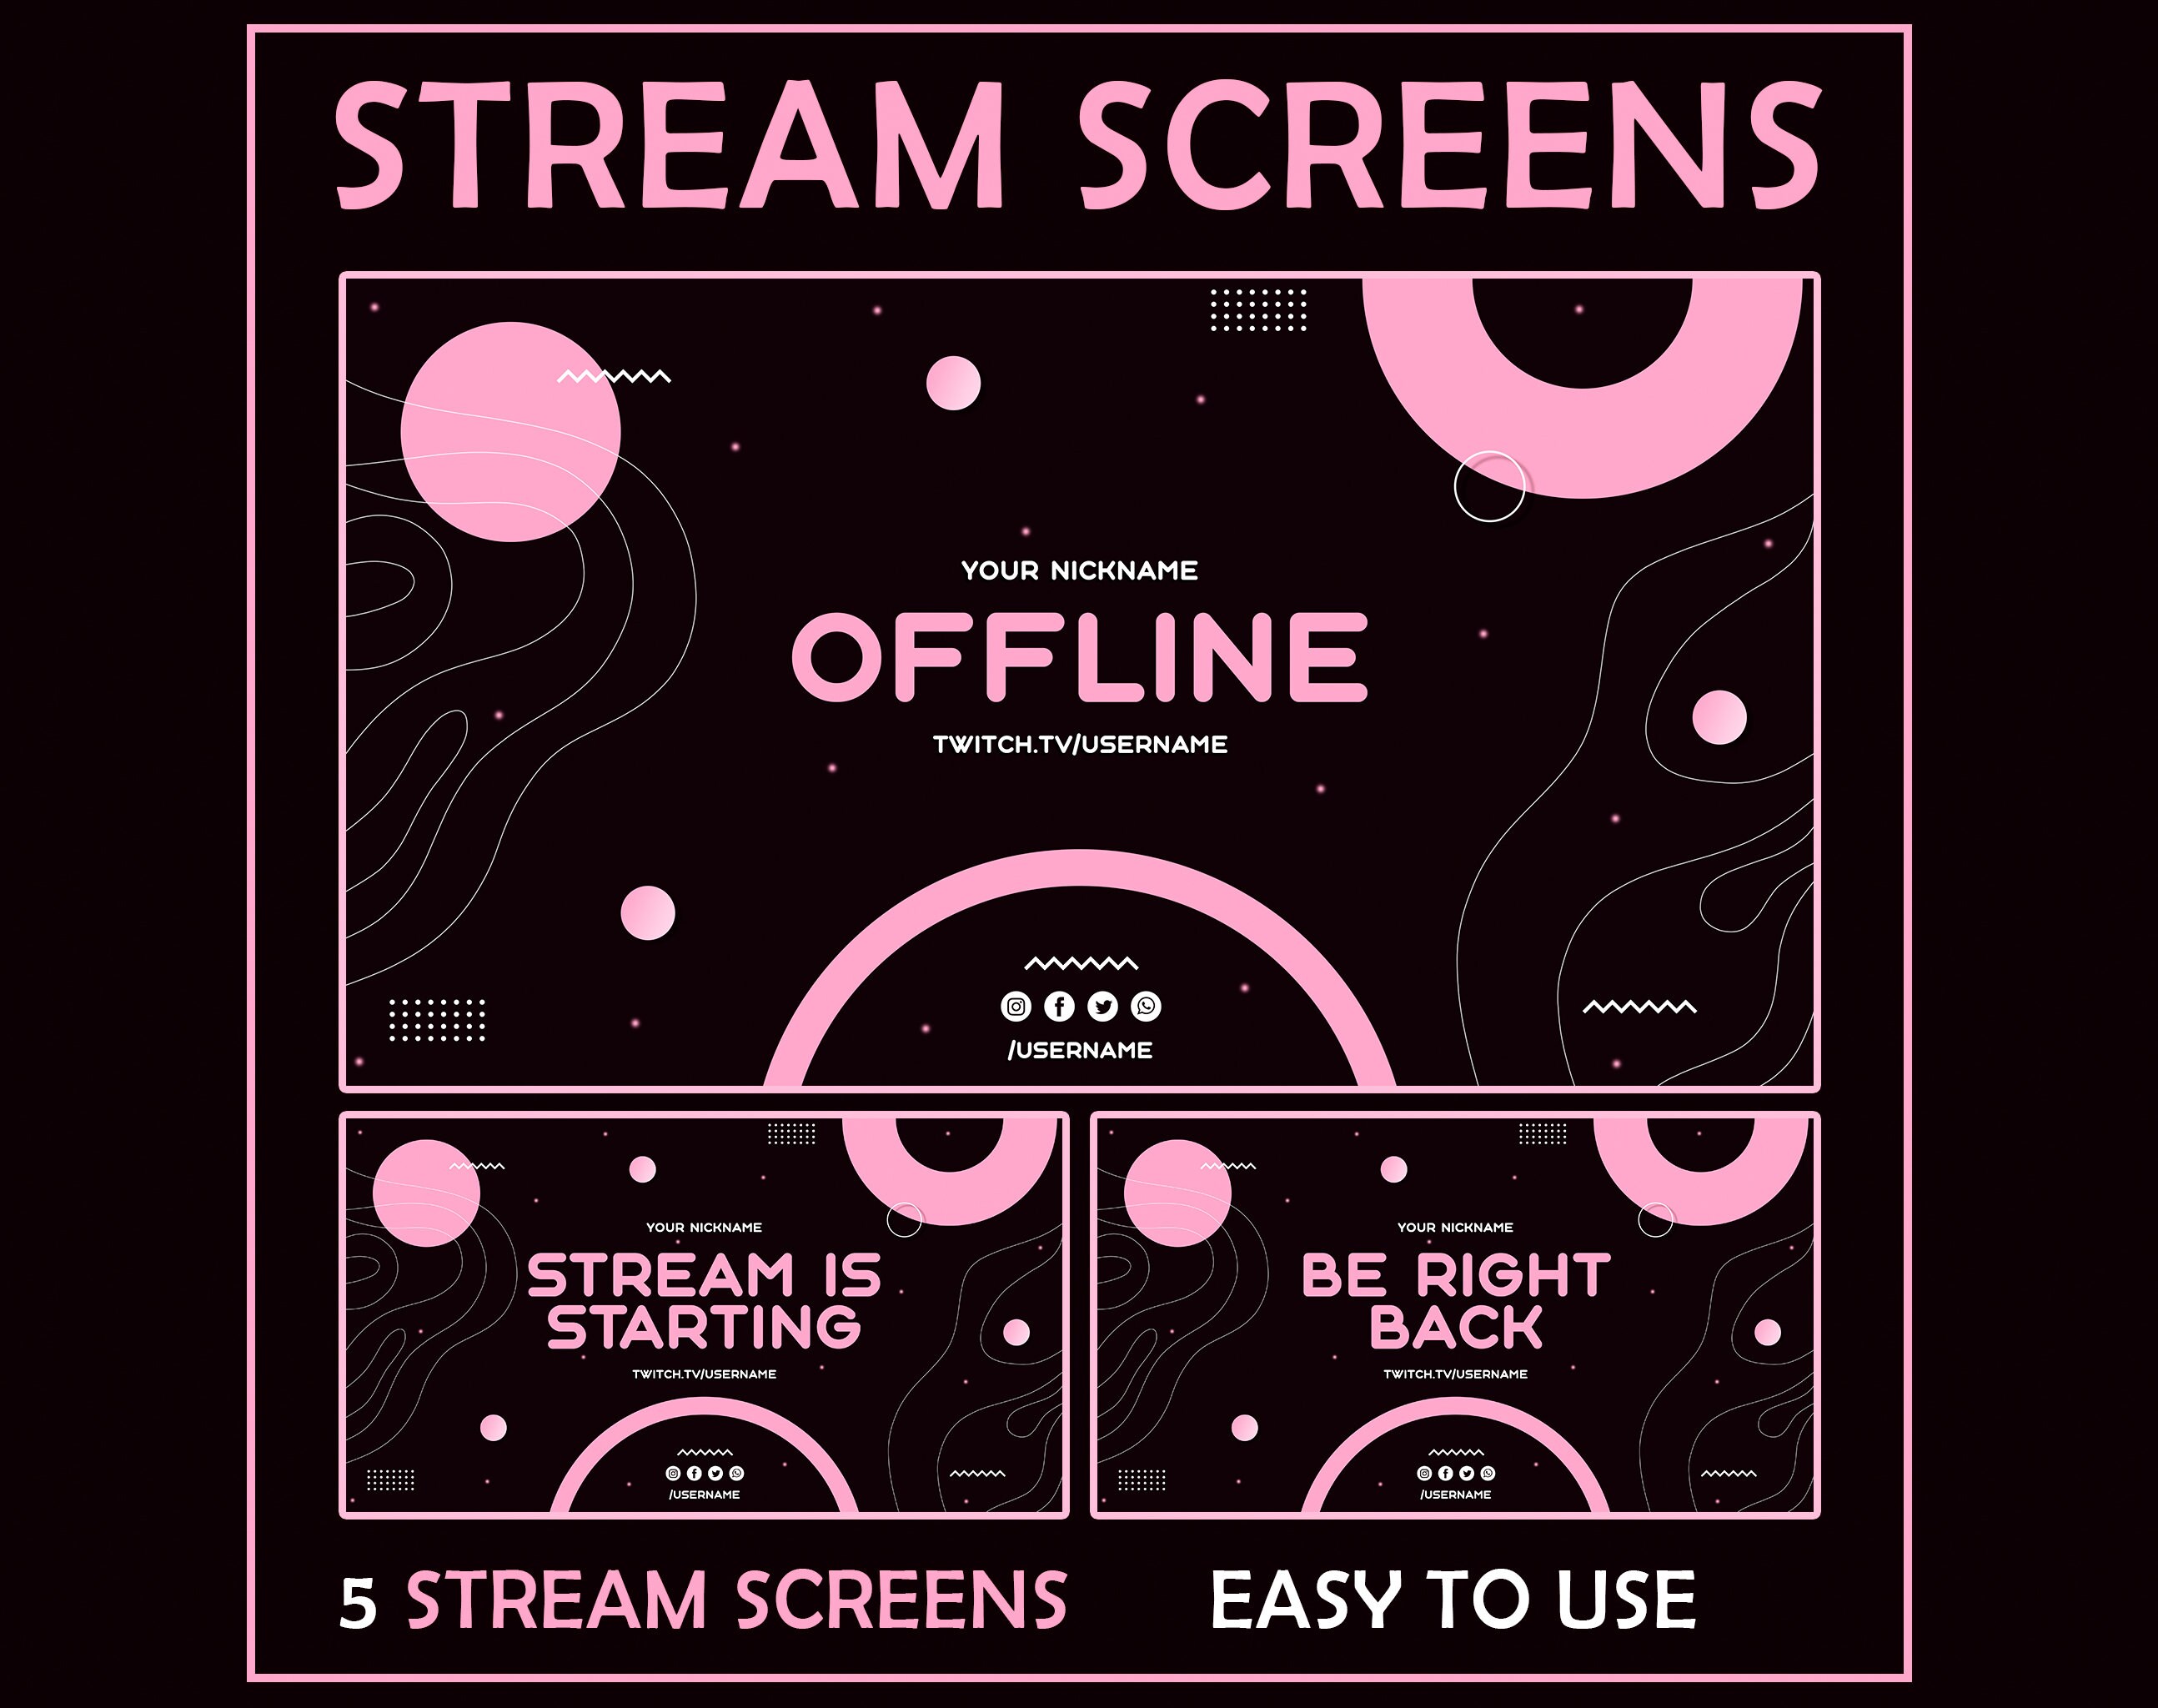 Start offline. Be right back для стрима. Stream offline.